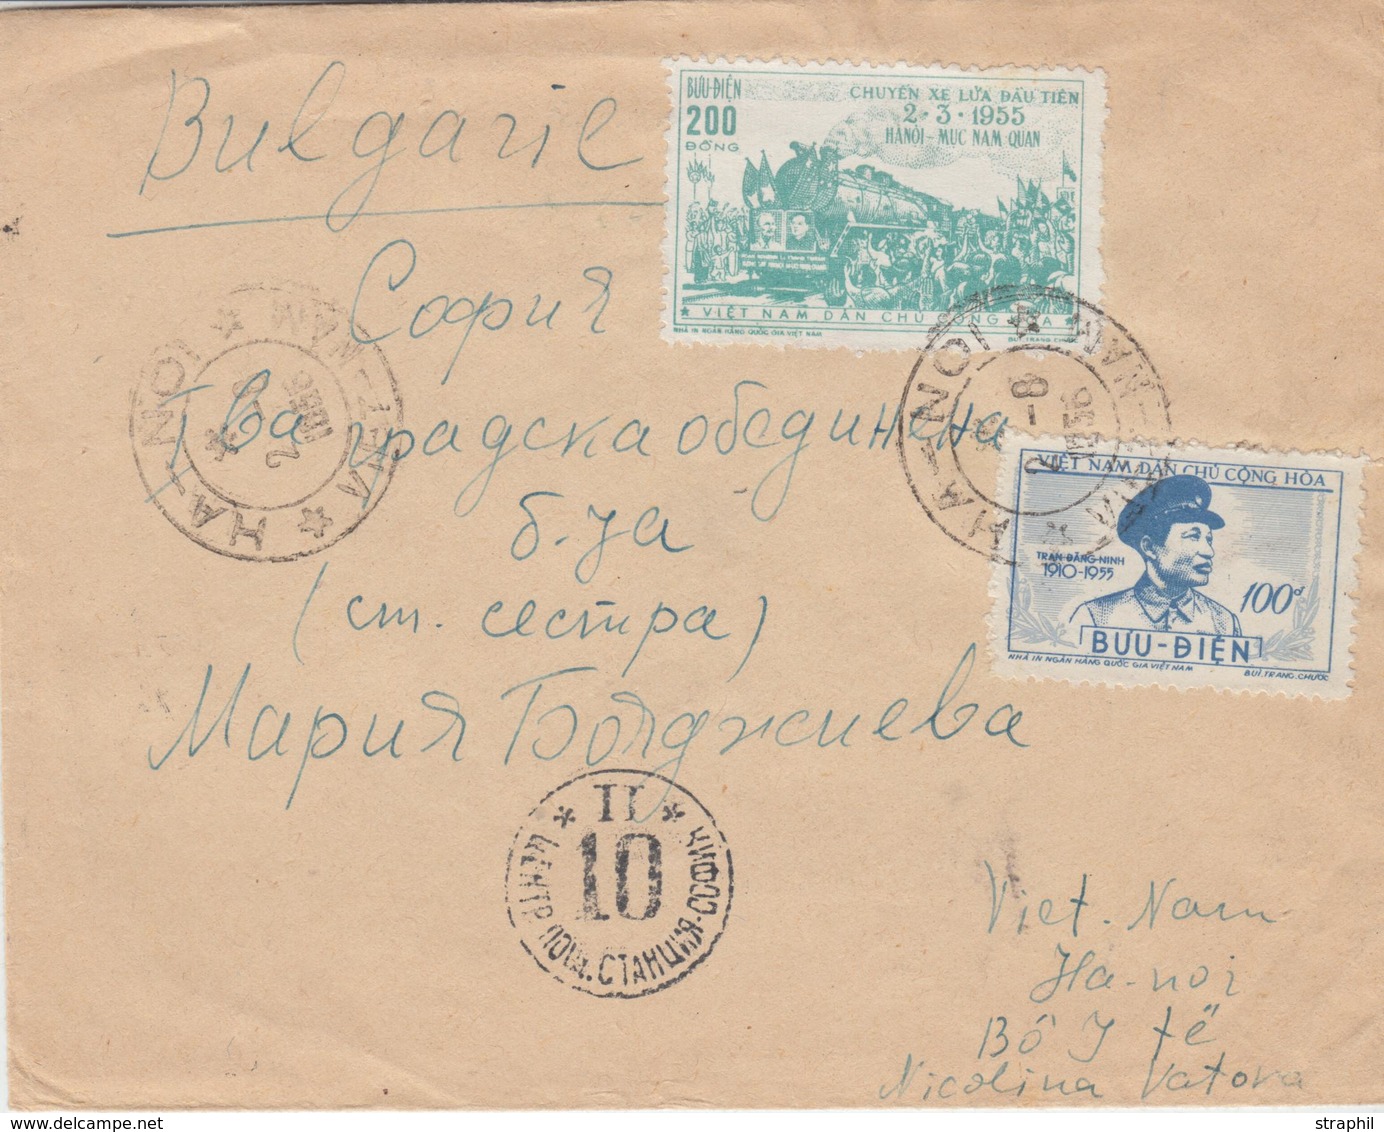 L VIETNAM DU NORD - L - N°90, 107 - S/Pli De Hanoï - 2 Juin 1956 - Pr La Bulgarie - TB - Viêt-Nam